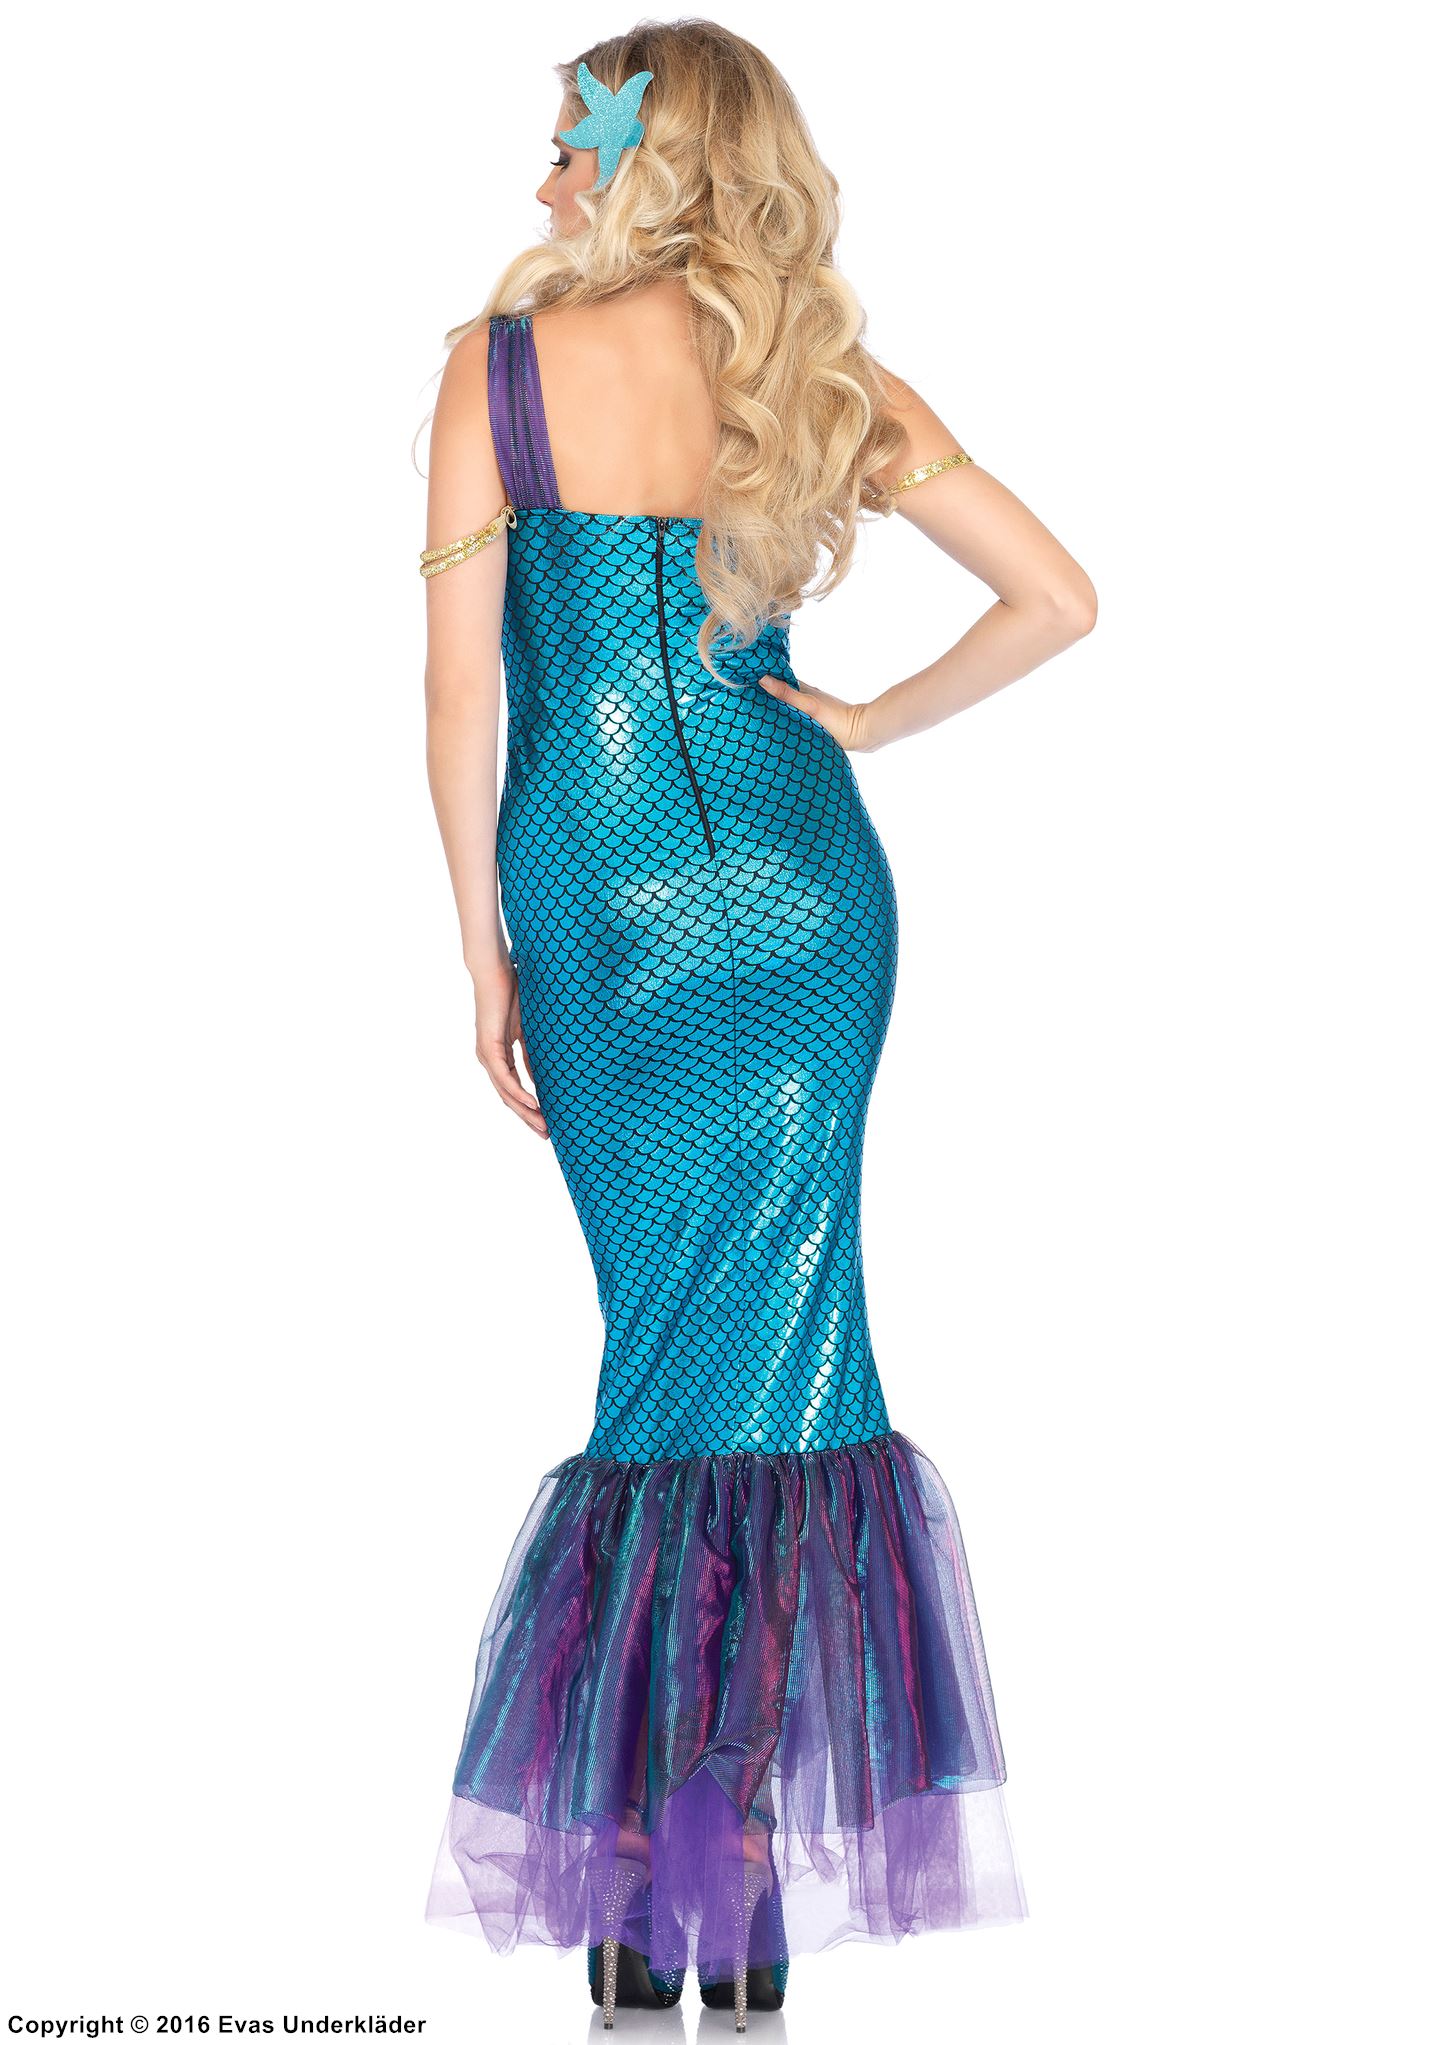 Mermaid, costume dress, sequins, mesh inlay, seashell